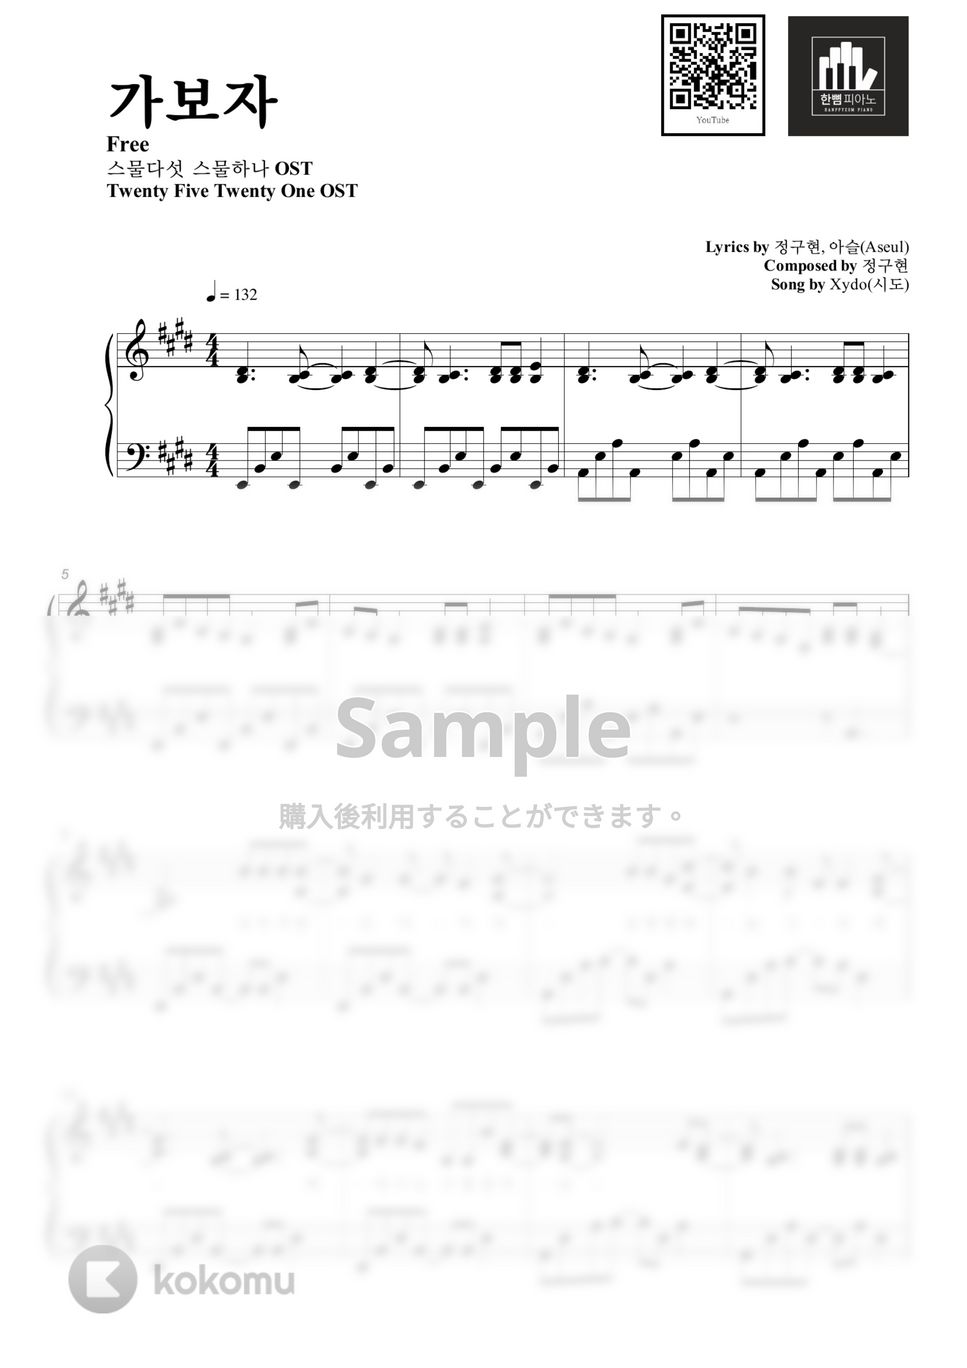 Twenty Five Twenty One - 가보자(Free) (PIANO COVER) by HANPPYEOMPIANO